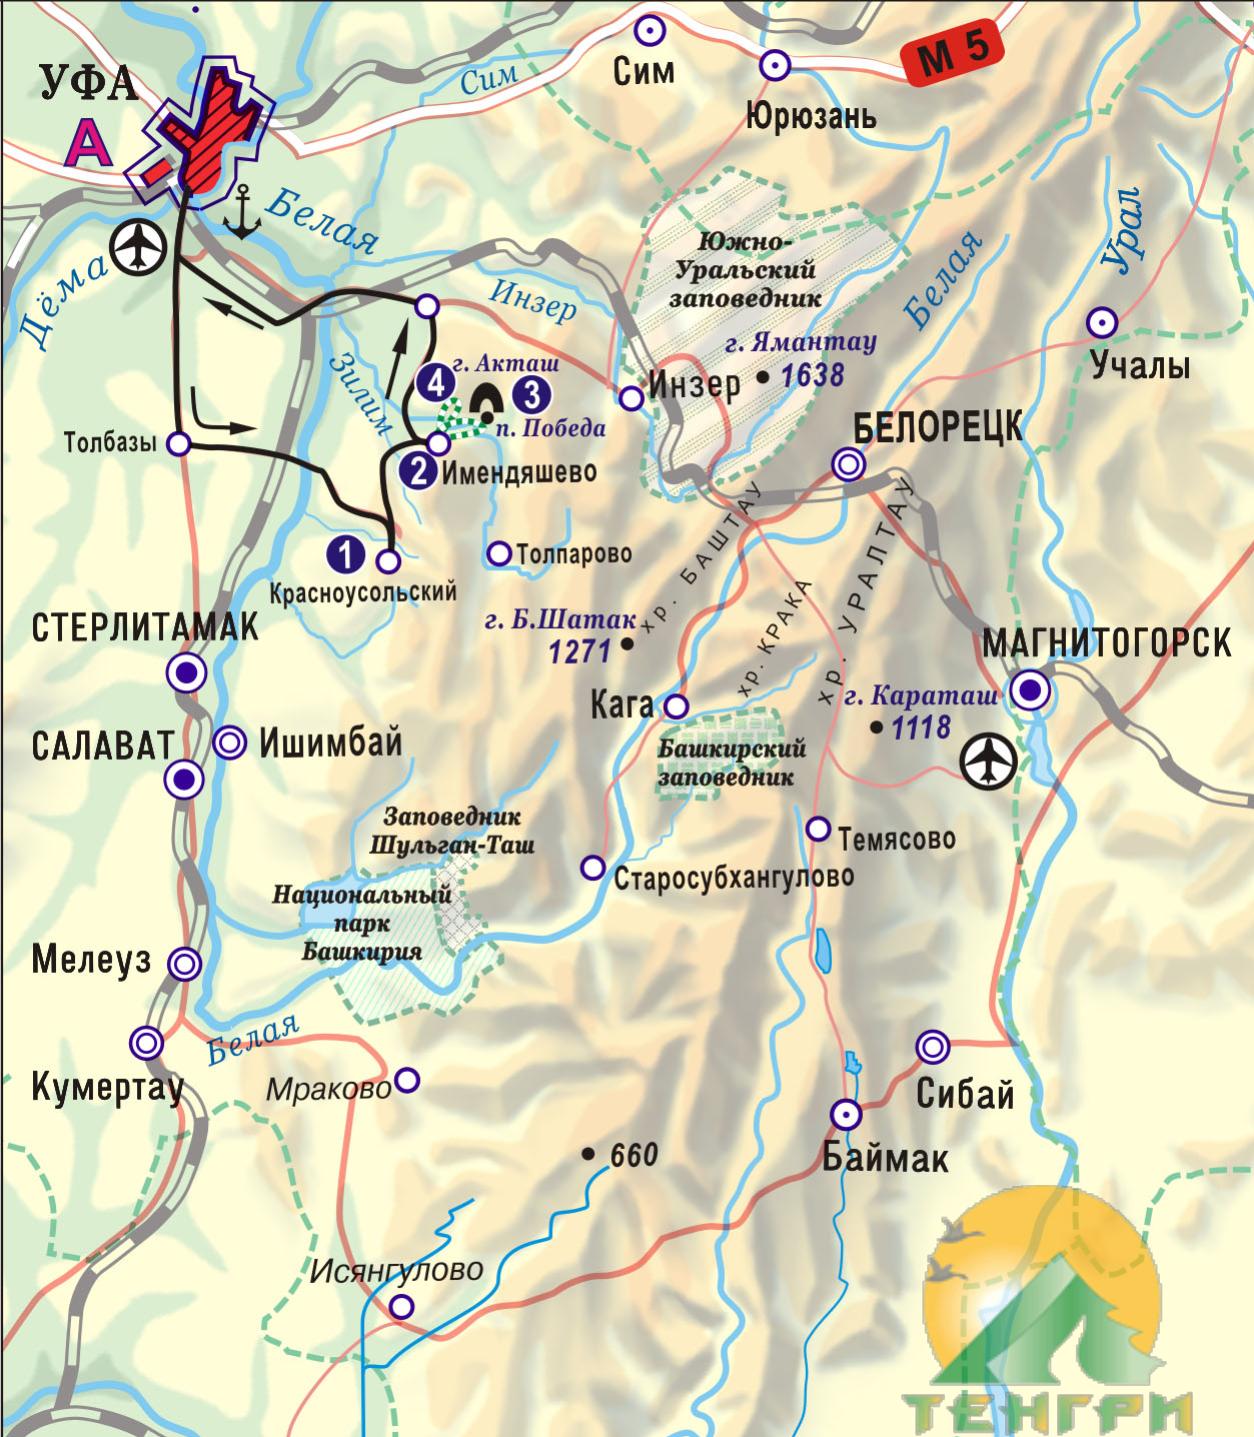 Схема конного маршрута 'Зилимский конный'